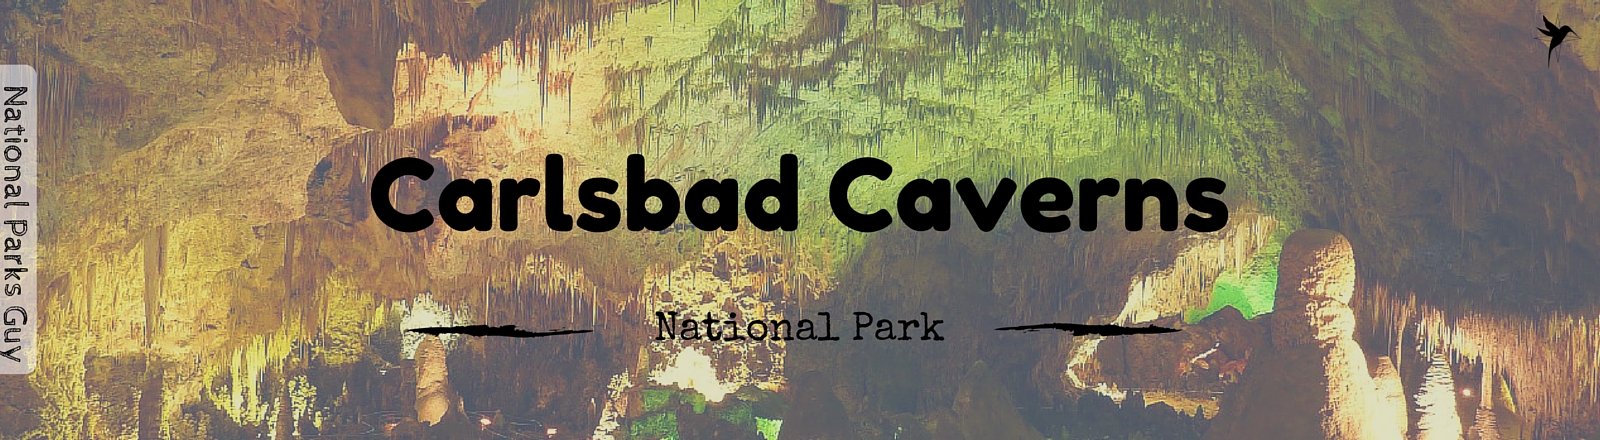 Carlsbad Caverns National Park, USA, National Parks Guy, Stories, Tales, Adventures, Wildlife